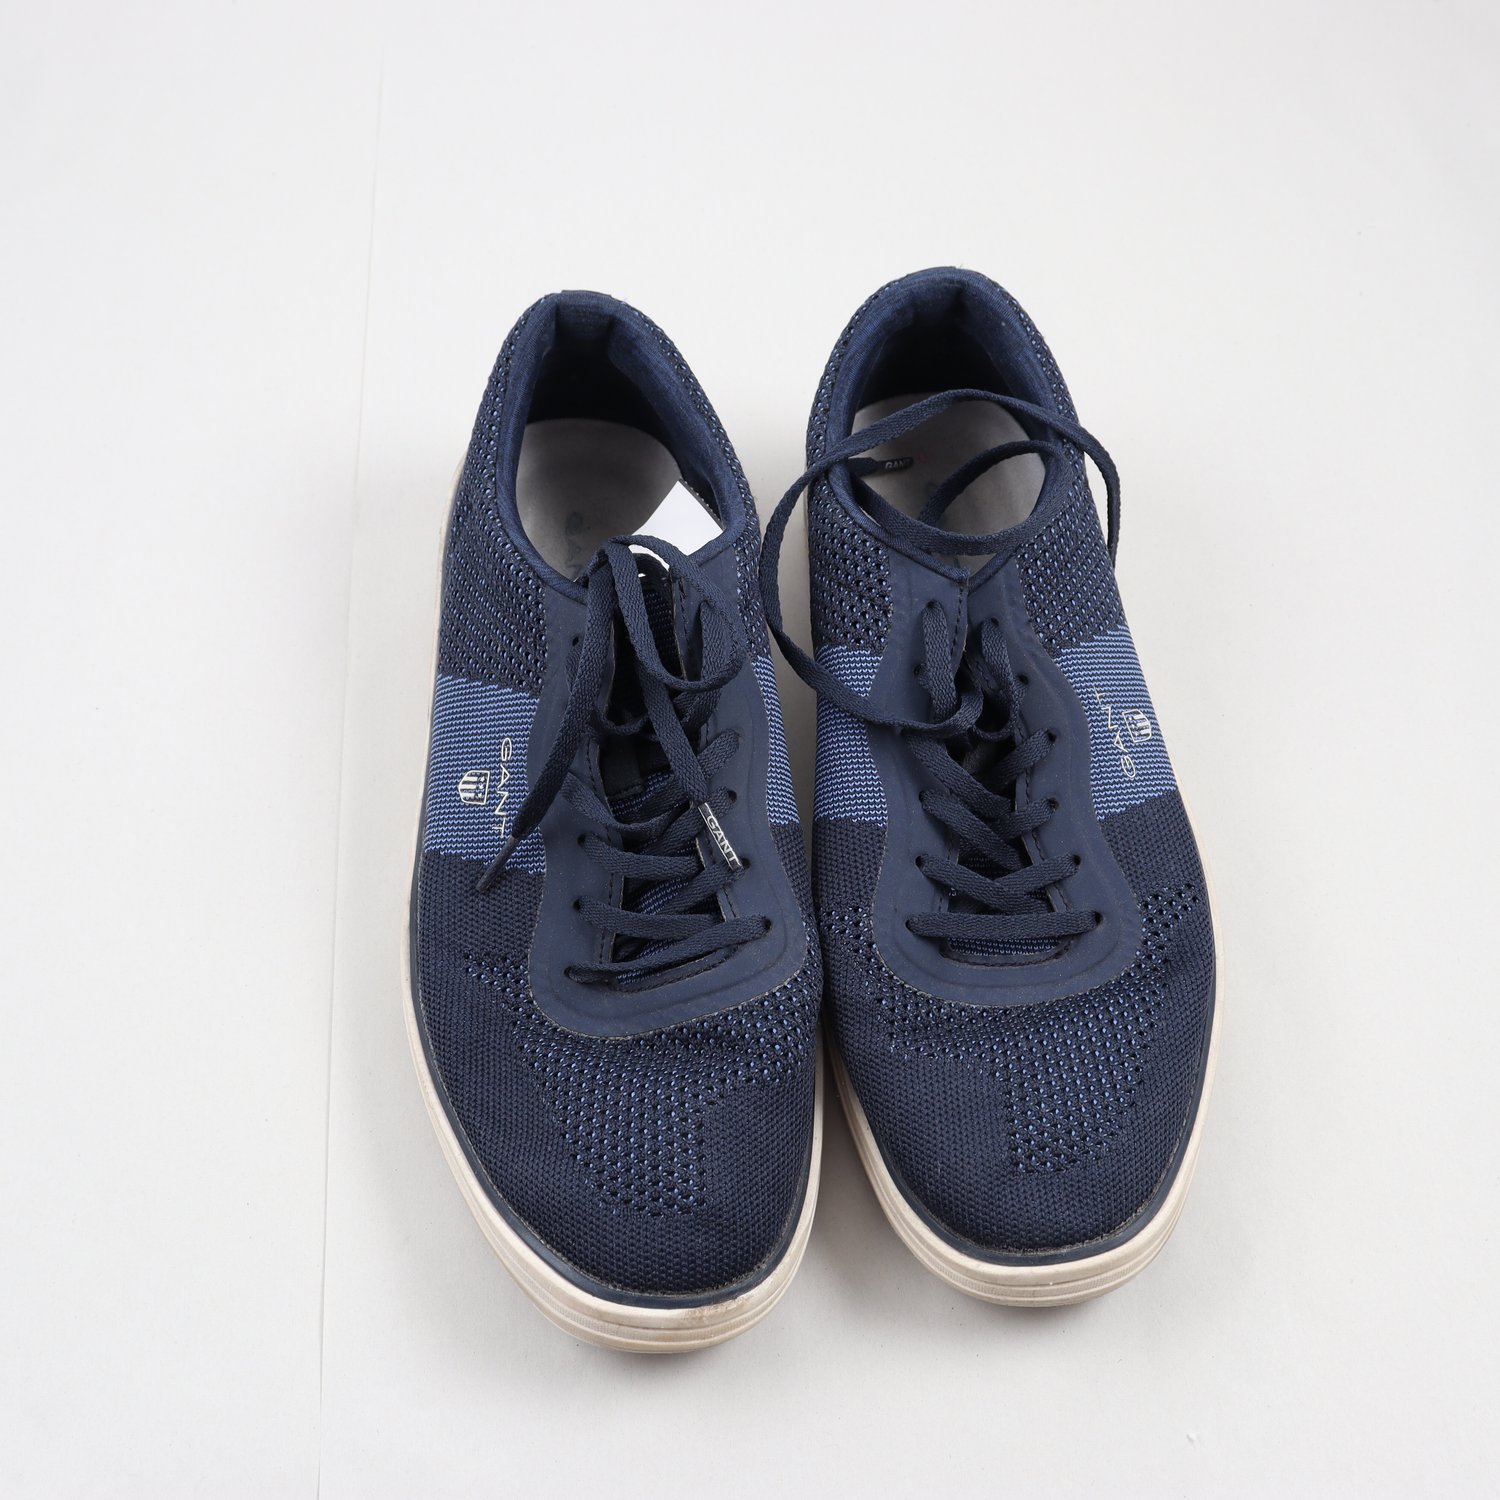 Sneakers, Gant, blå, stl. 45